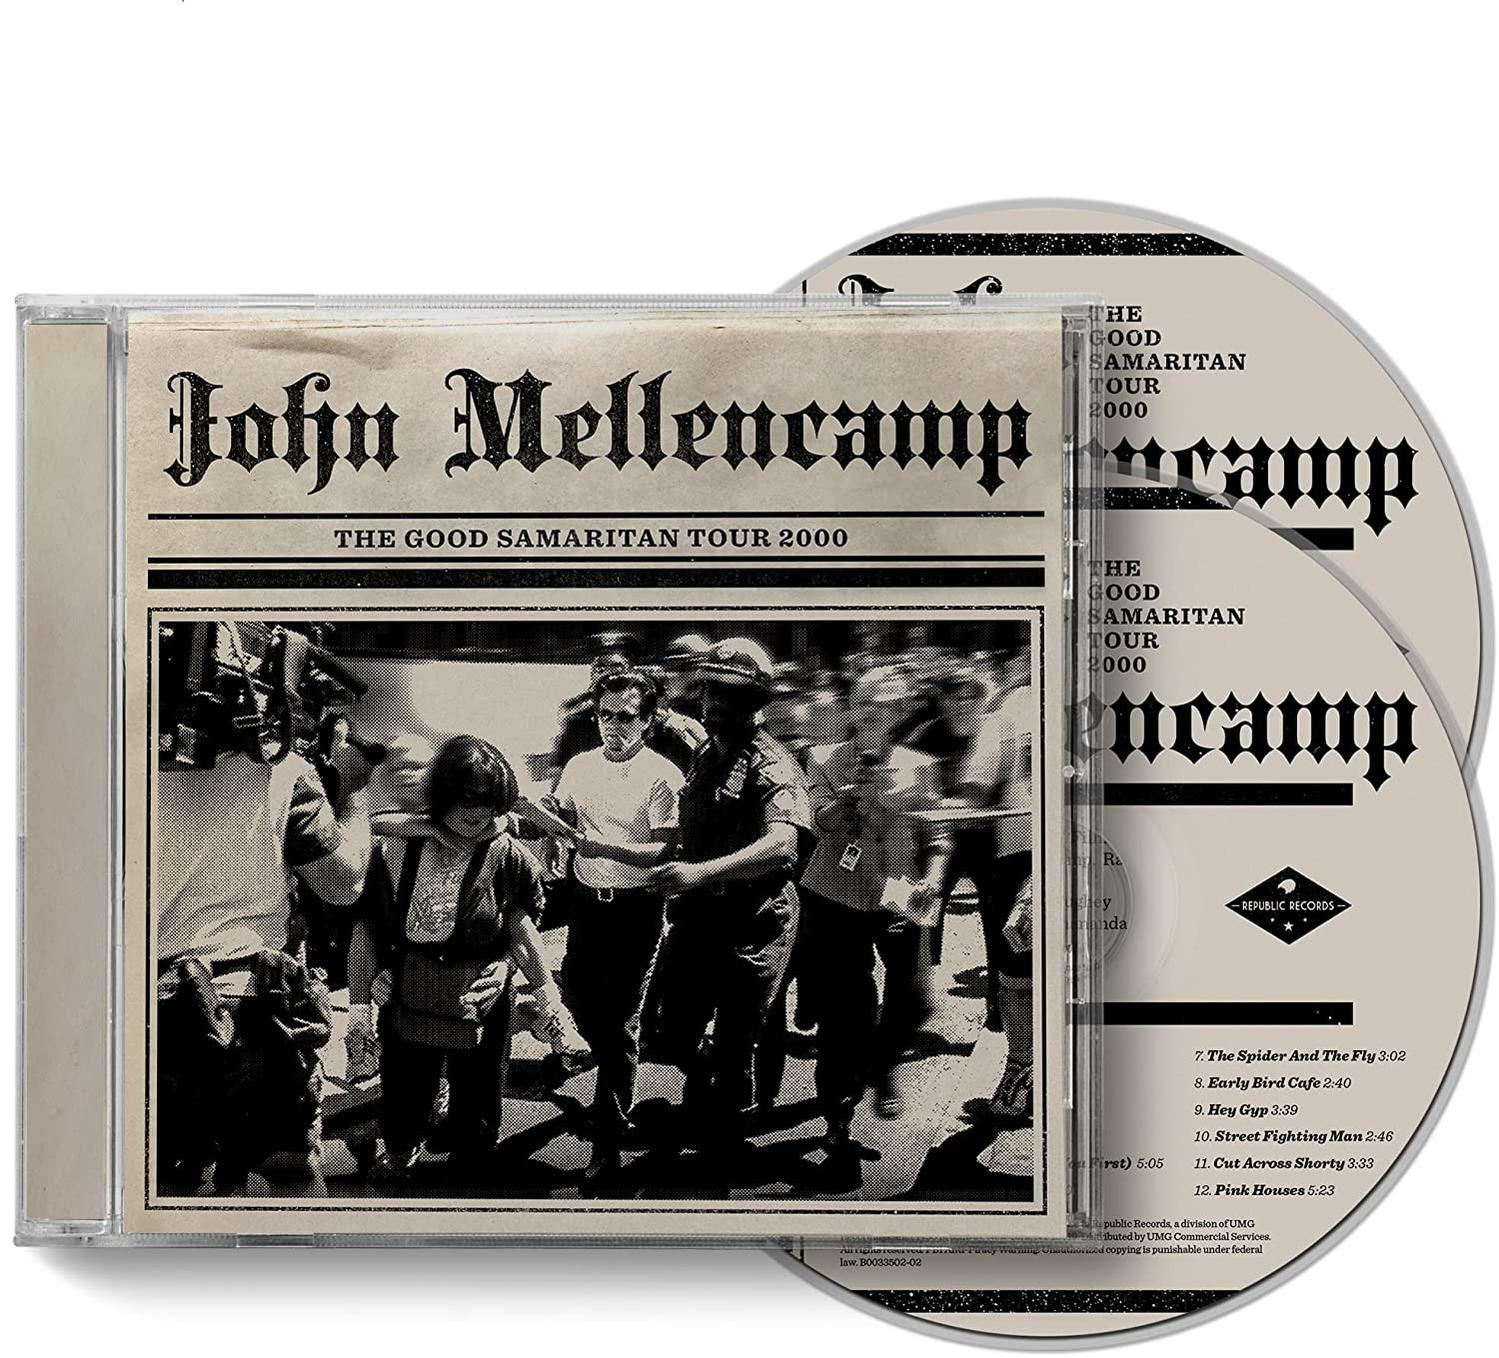 Tour Good 2000 Video) The DVD John - + Samaritan Mellencamp - (CD (CD+DVD)